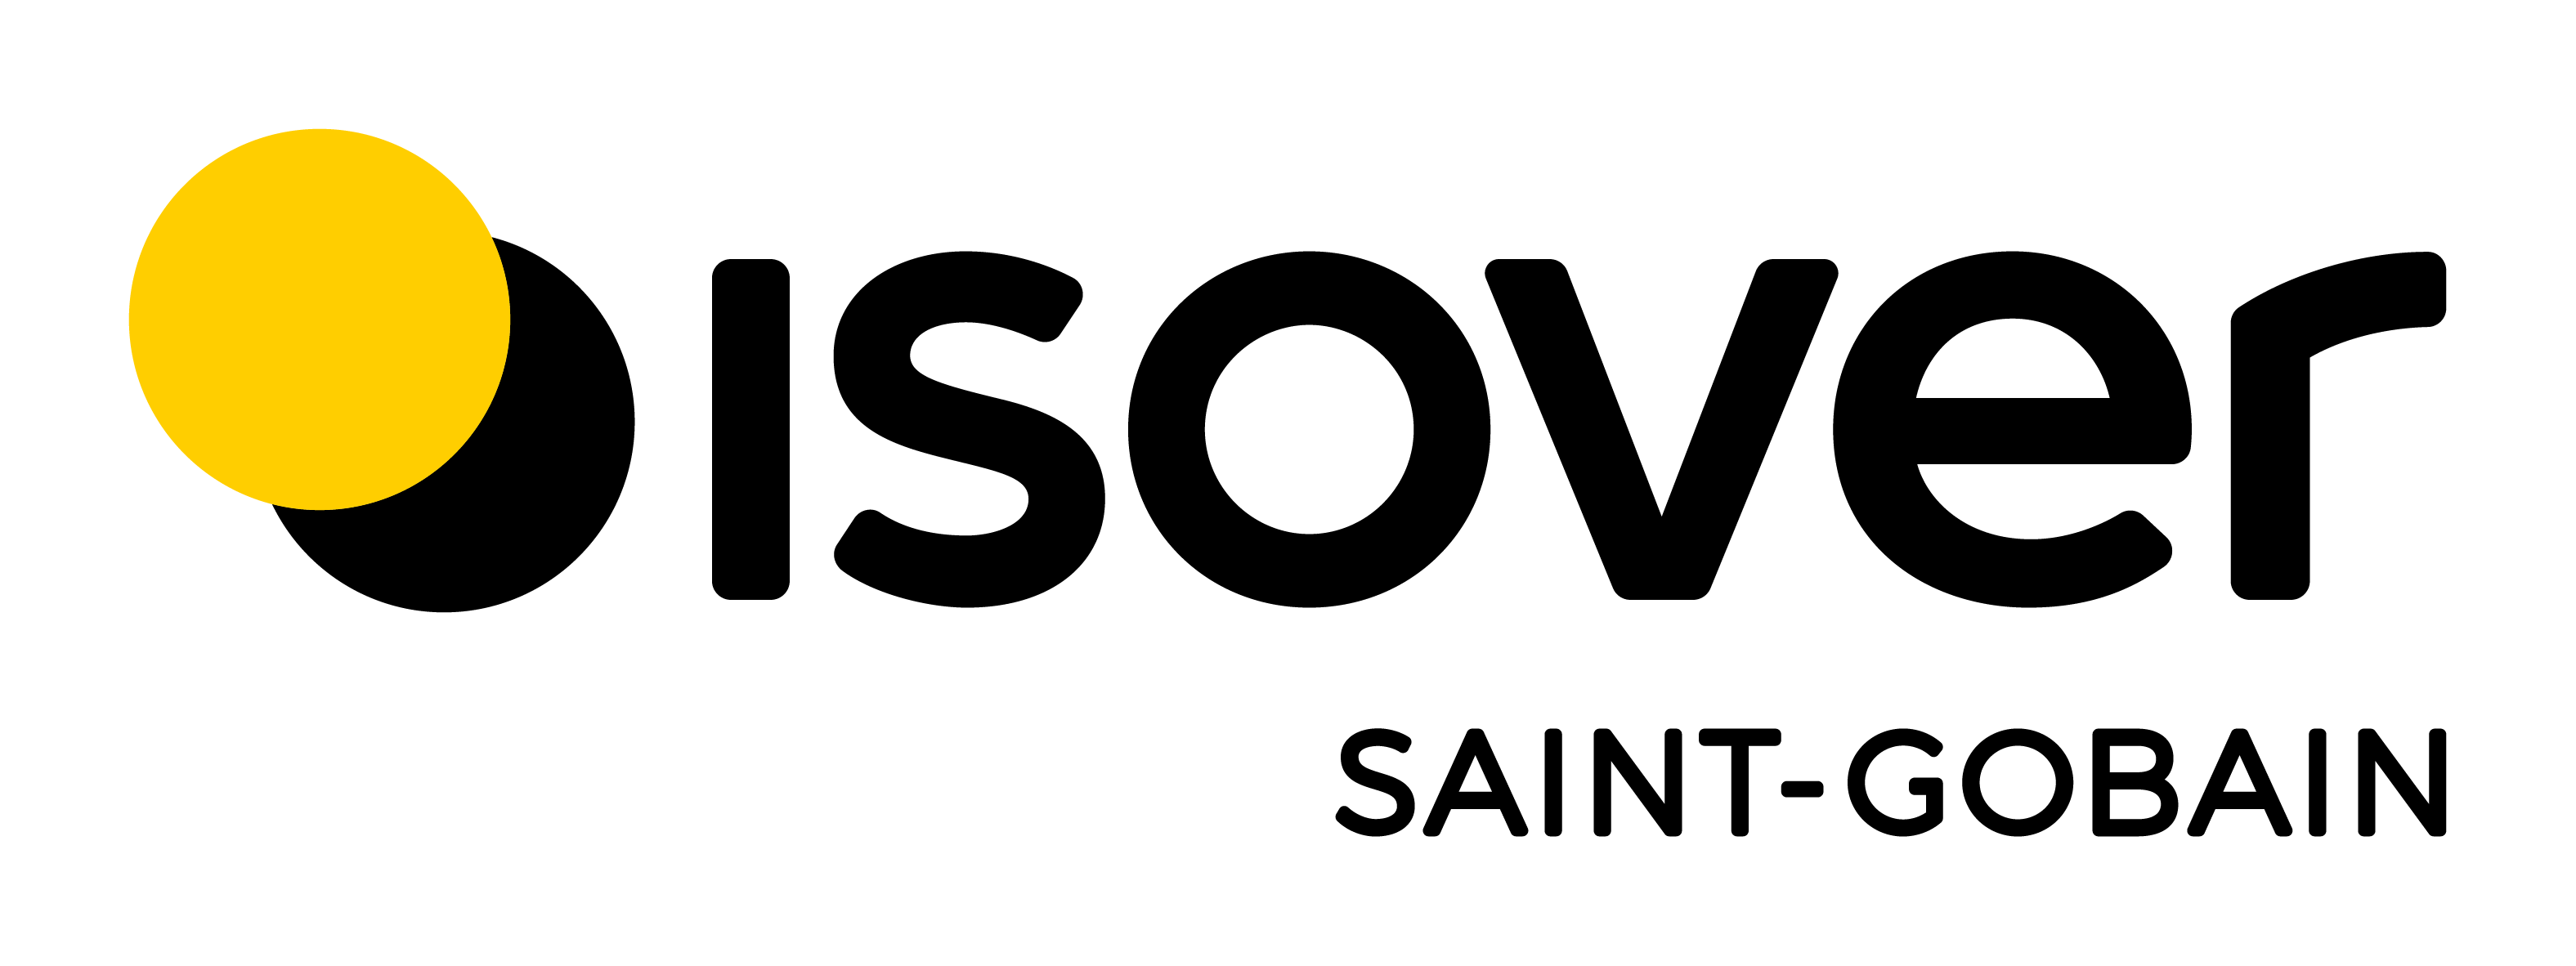 Isover - Saint-Gobain | Adopt1Alternant - Offres d'emploi en stage et alternance